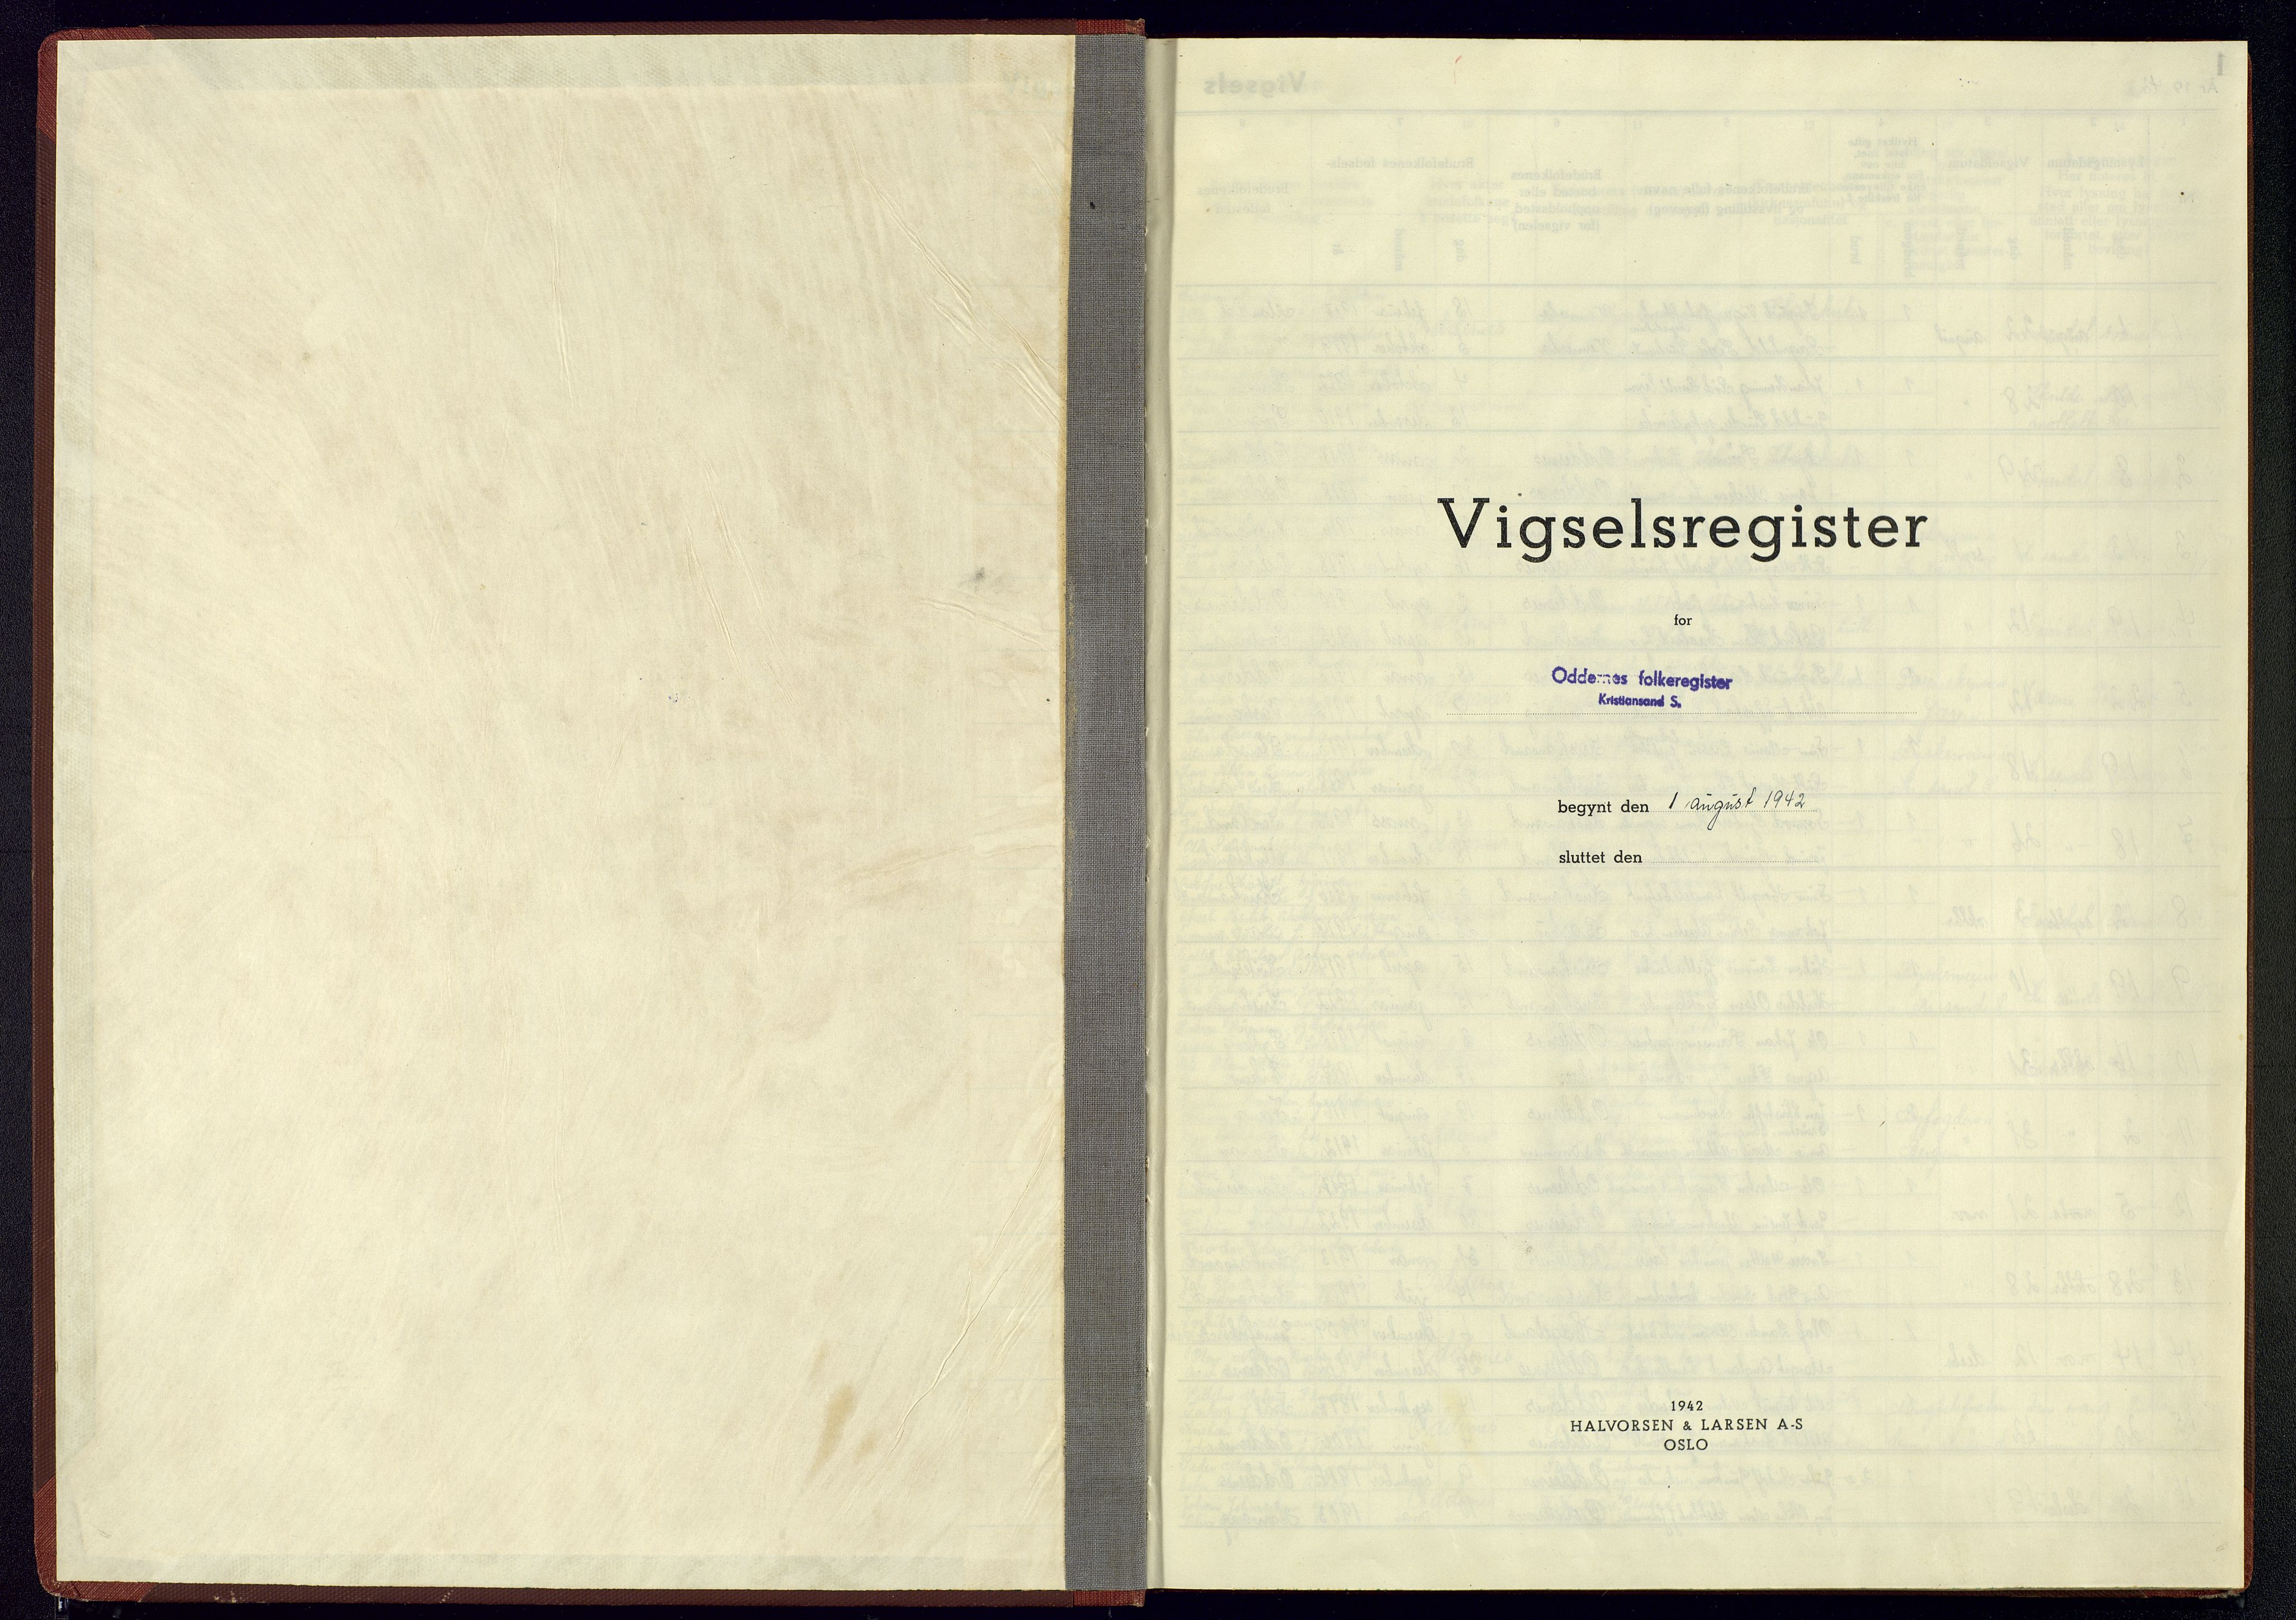 Oddernes sokneprestkontor, SAK/1111-0033/J/Jb/L0005: Vigselsregister nr. 5, 1942-1945